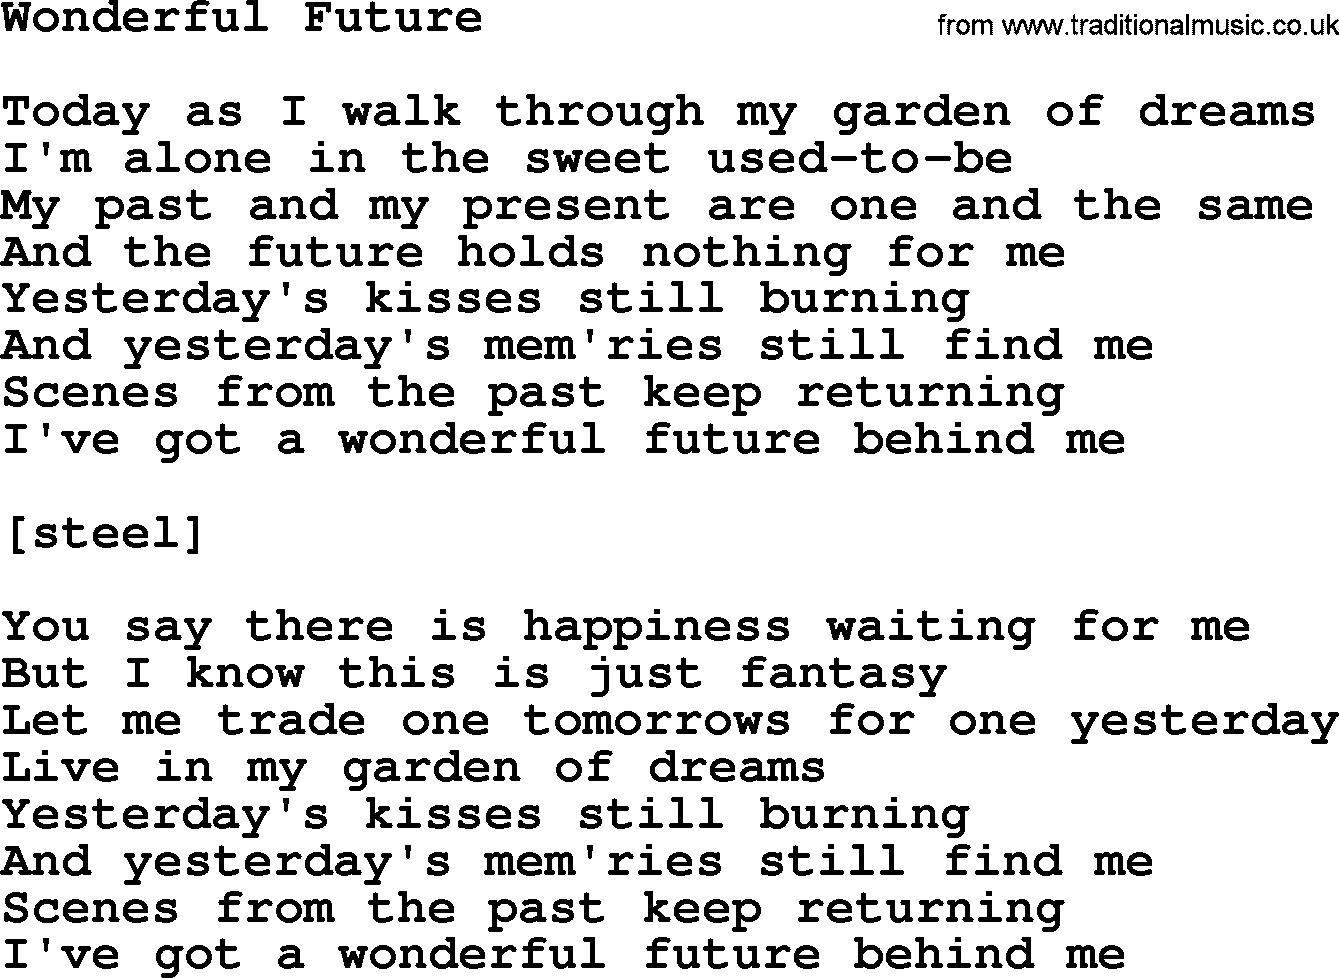 Willie Nelson song: Wonderful Future lyrics